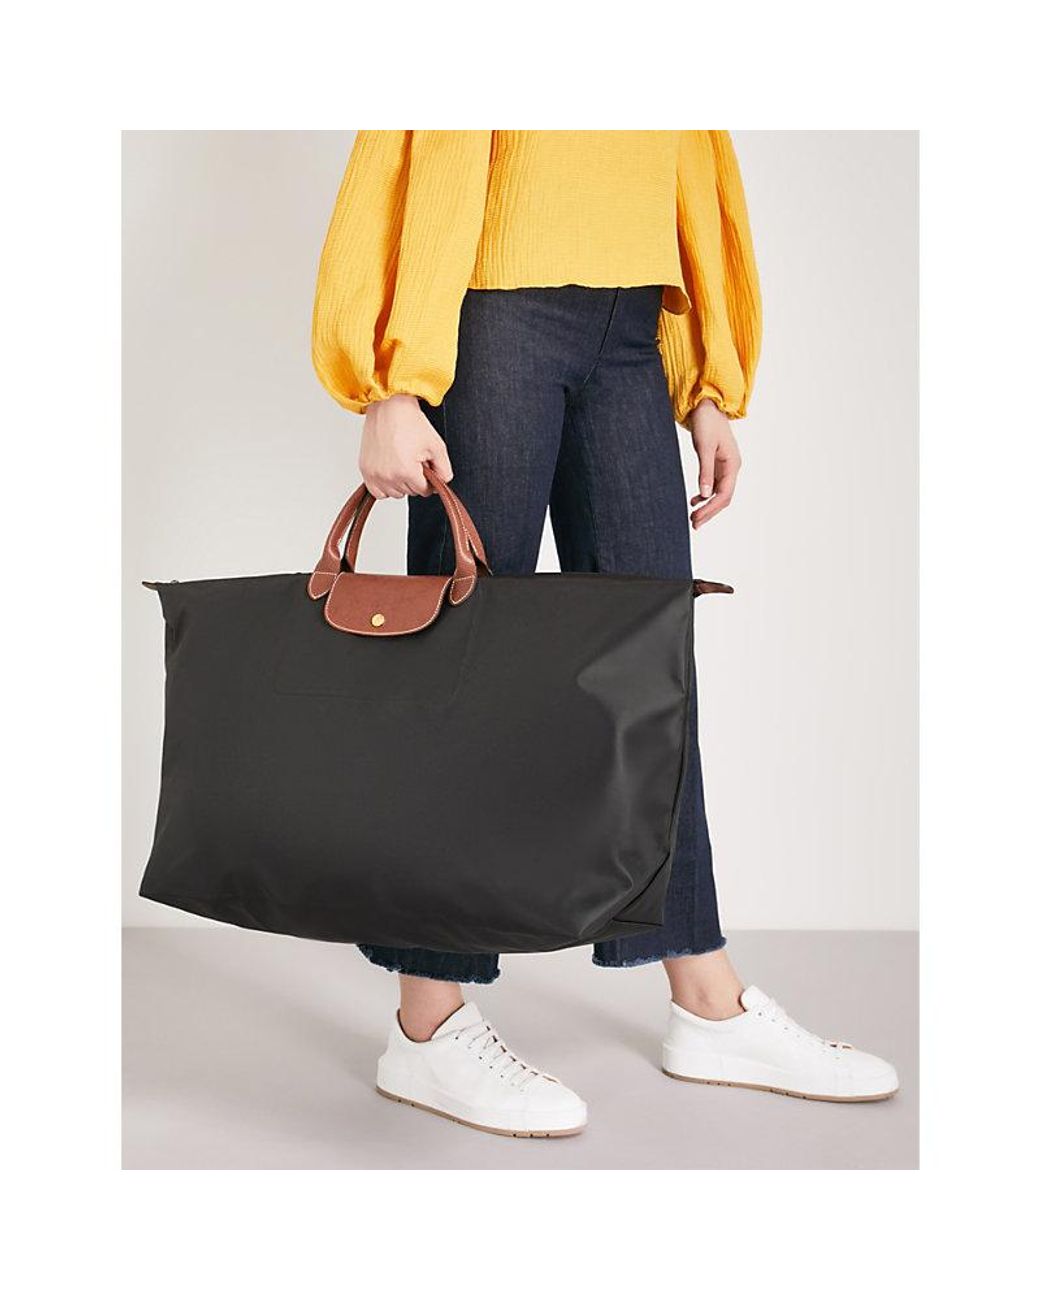 Large Le Pliage Xtra Handbag by Longchamp